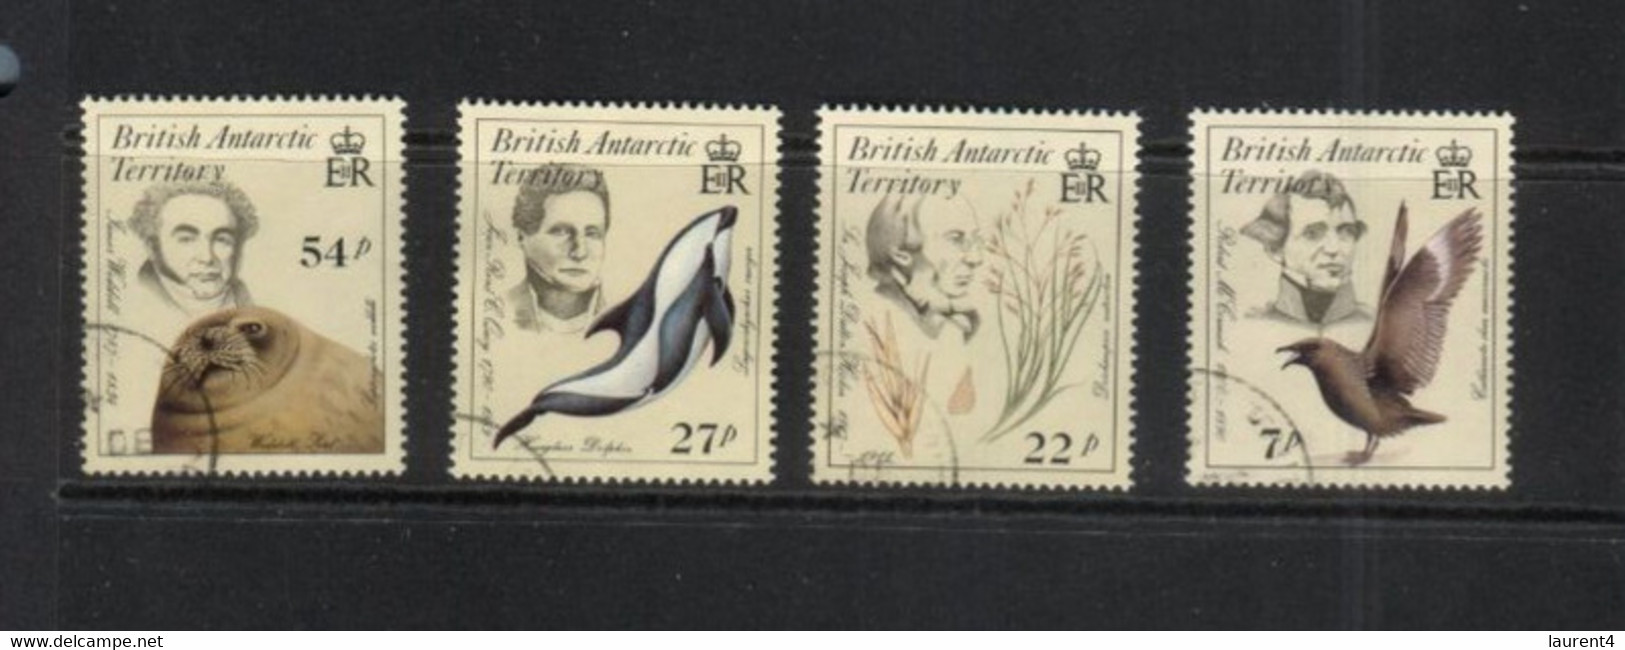 (8-10-2020) British Antarctic Territory - 4 Used Stamps  (Explorer) - Oblitérés